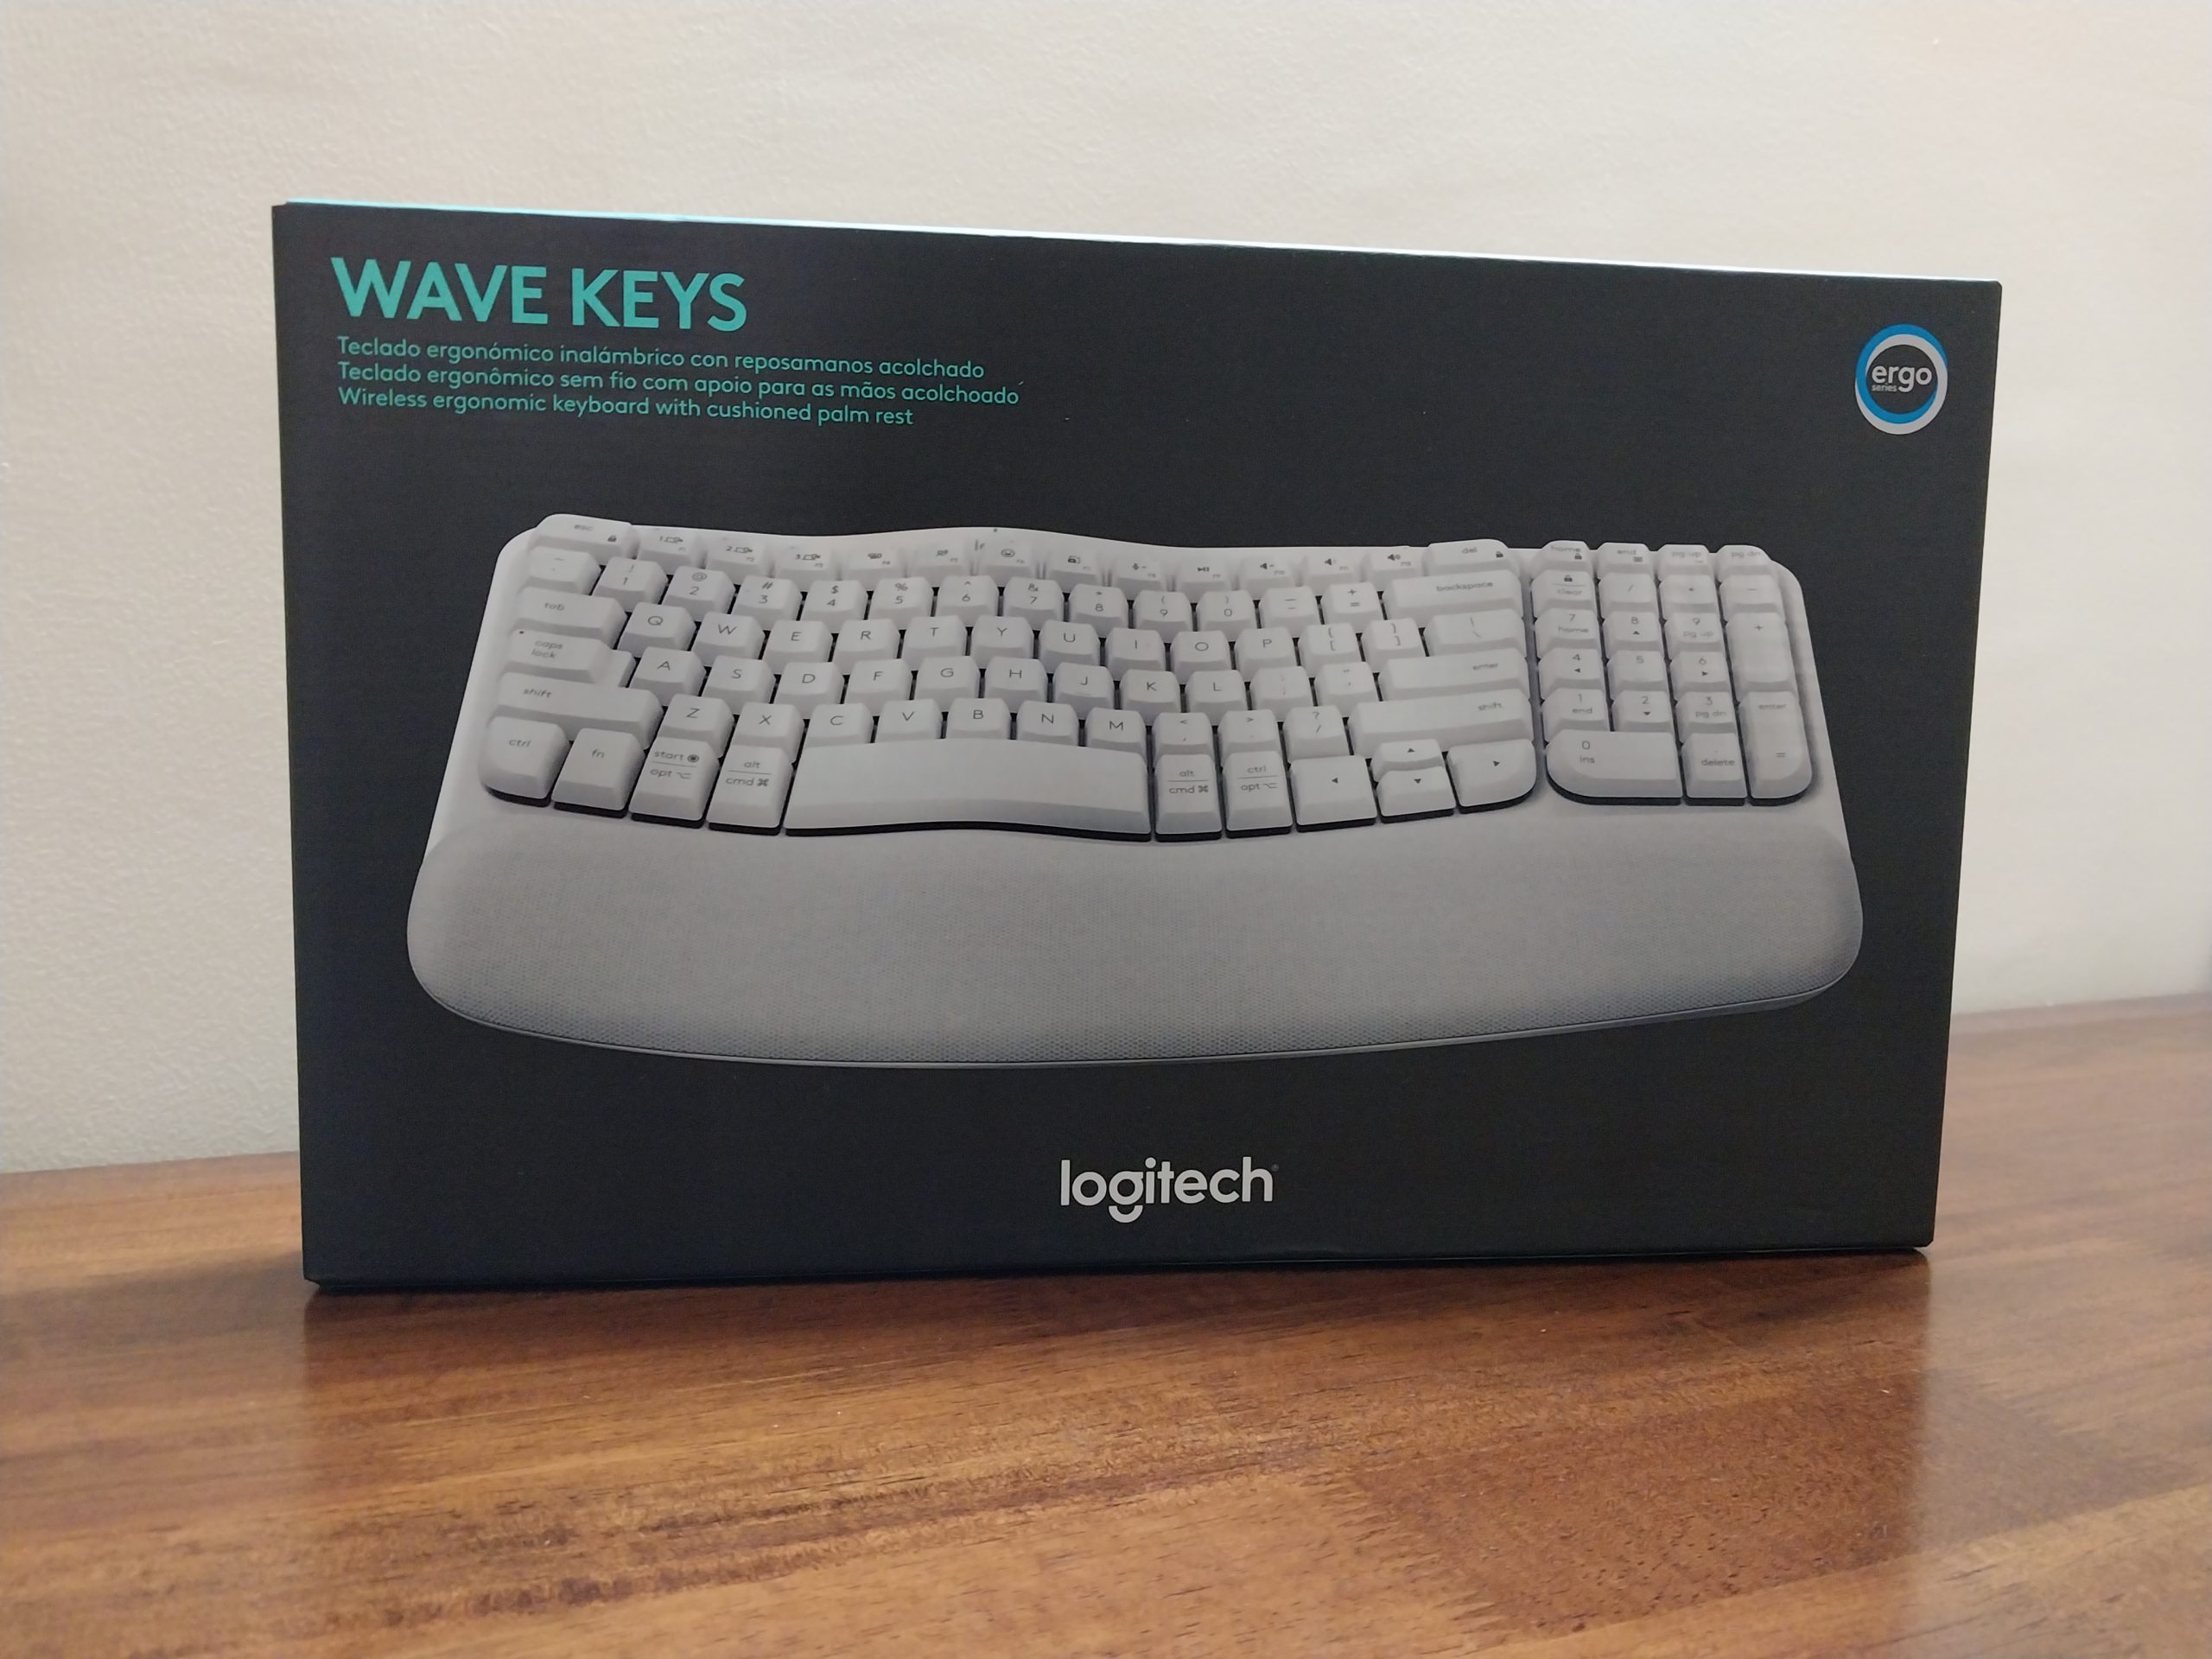 Logitech Wave Keys Keyboard - My Mobiles Editor’s Rating